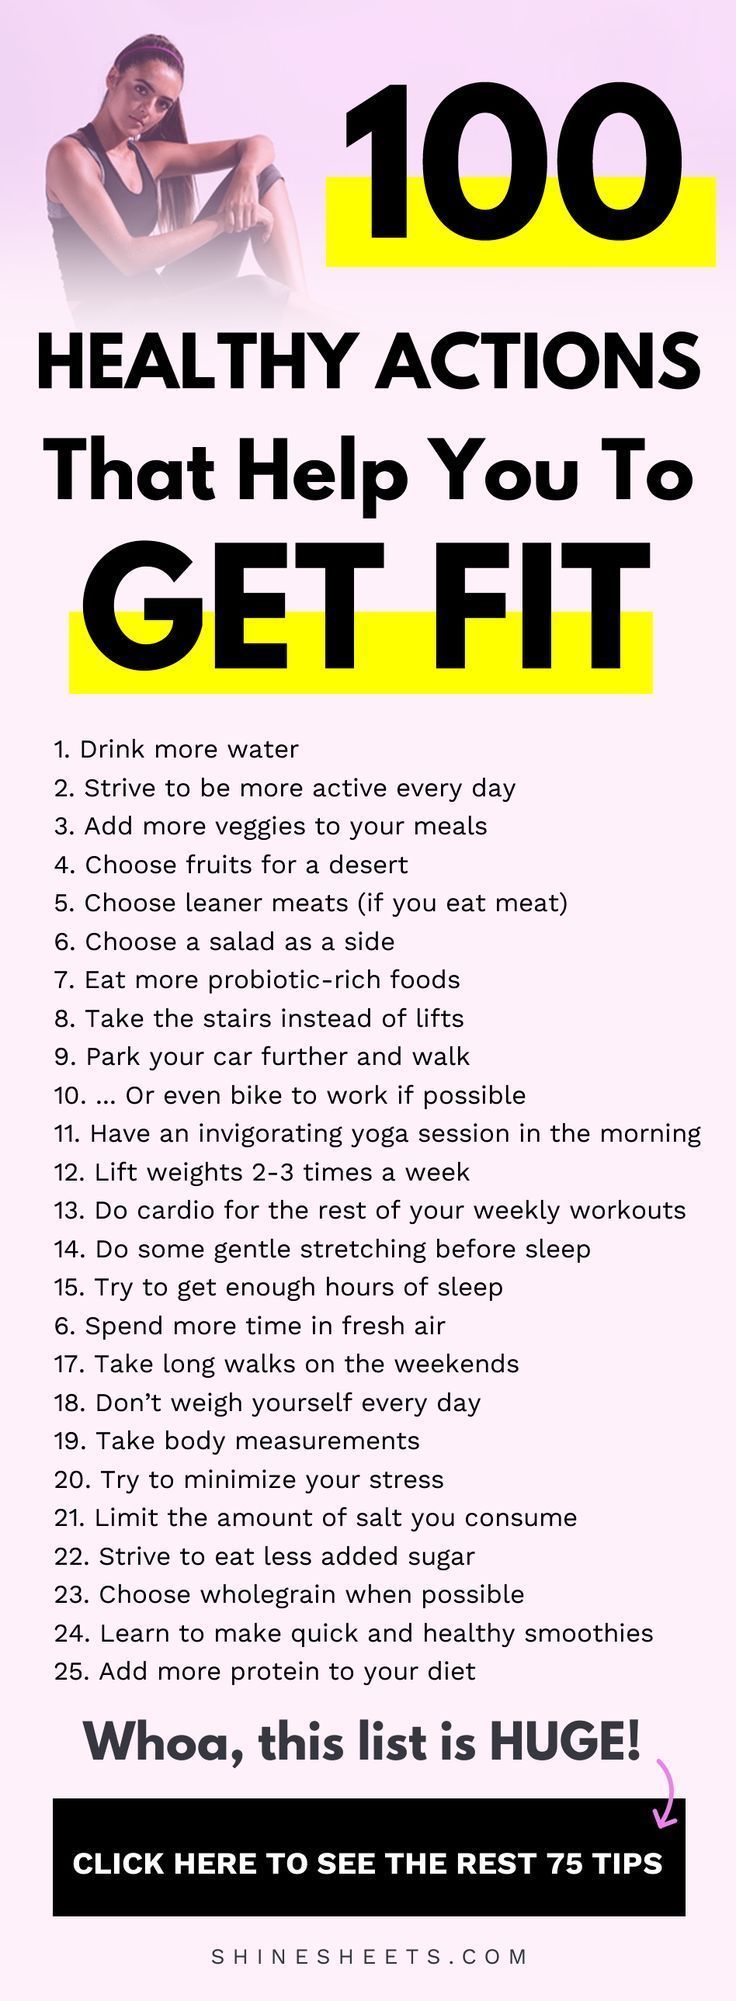 14 fitness Lifestyle goals ideas